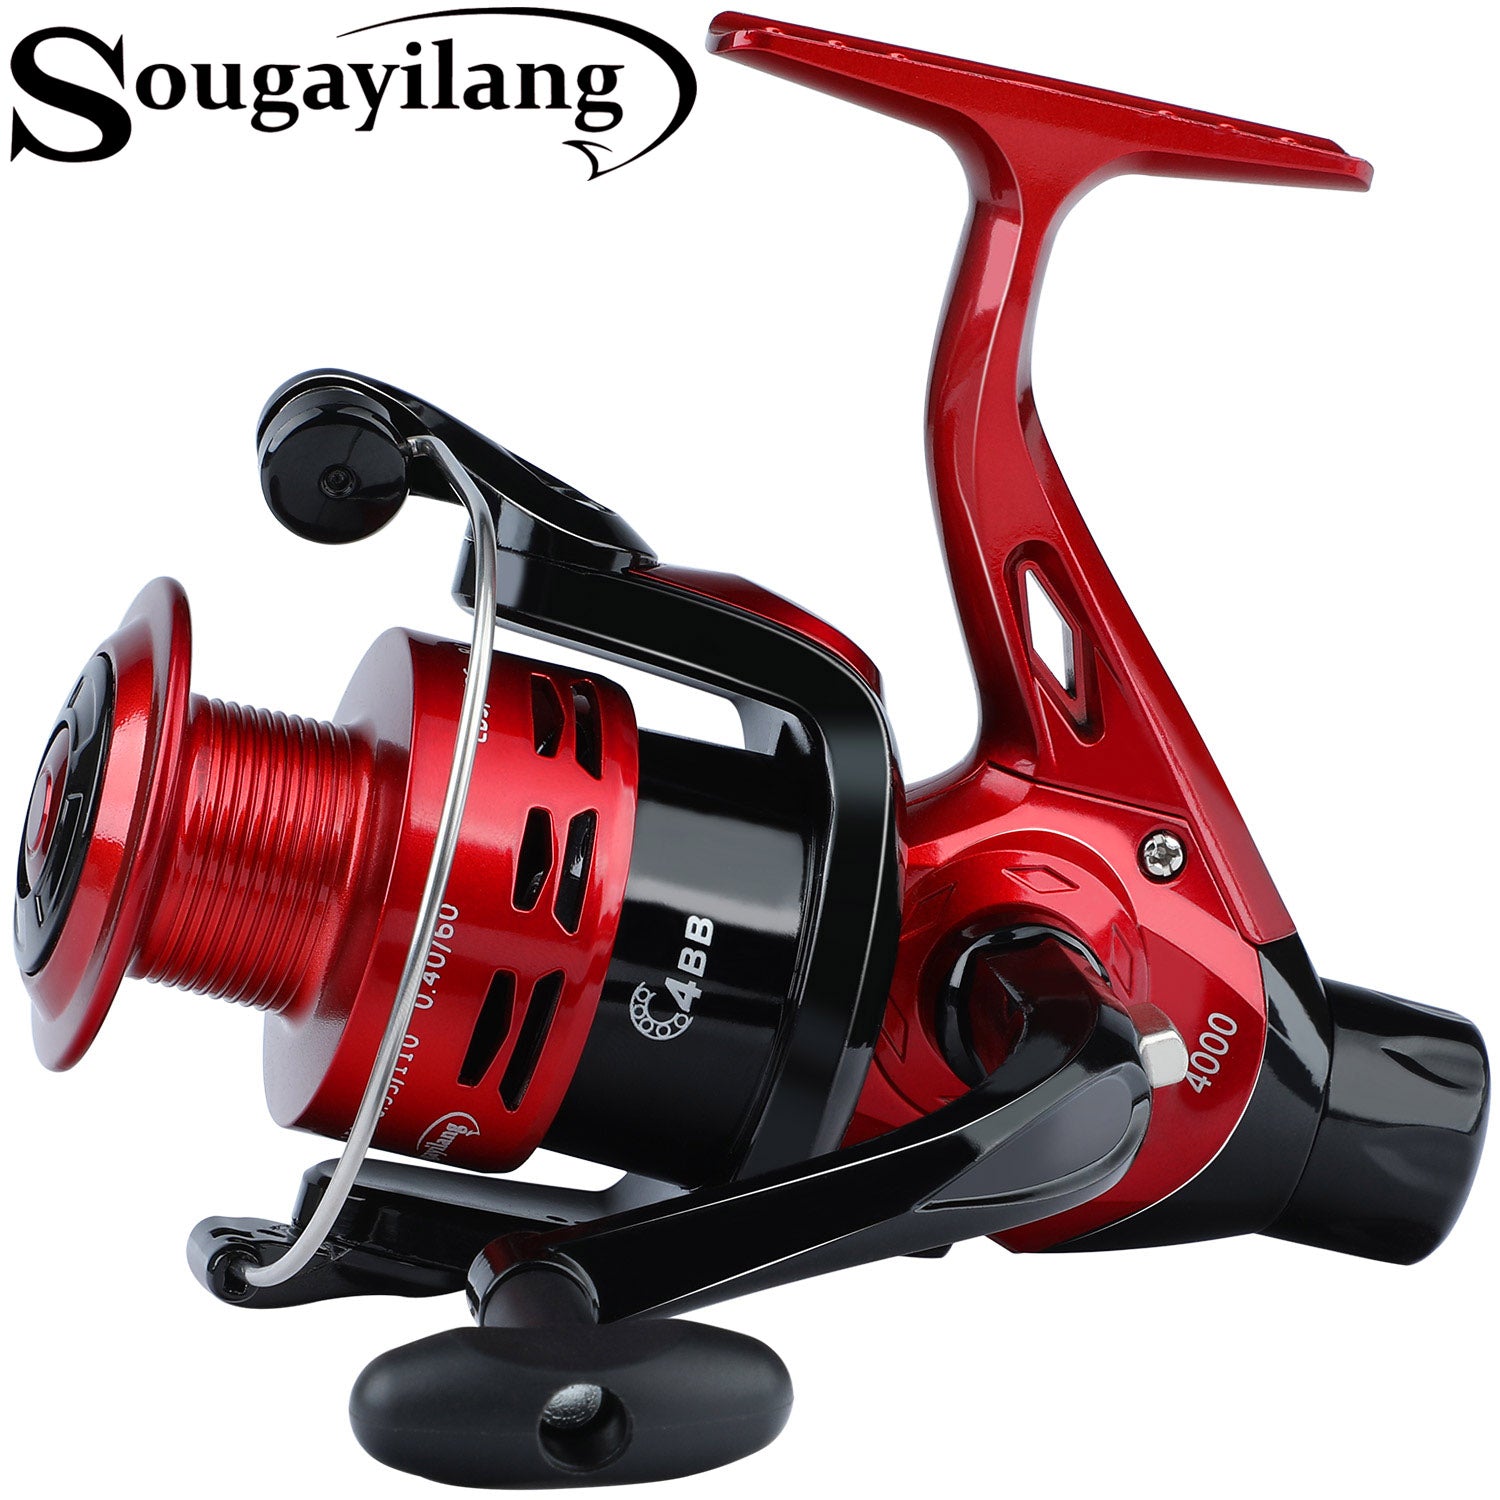 Sougayilang 33lbs Drag Spinning Reels for Fresh and Salt Water Carp Fishing Reel, Size: 7000